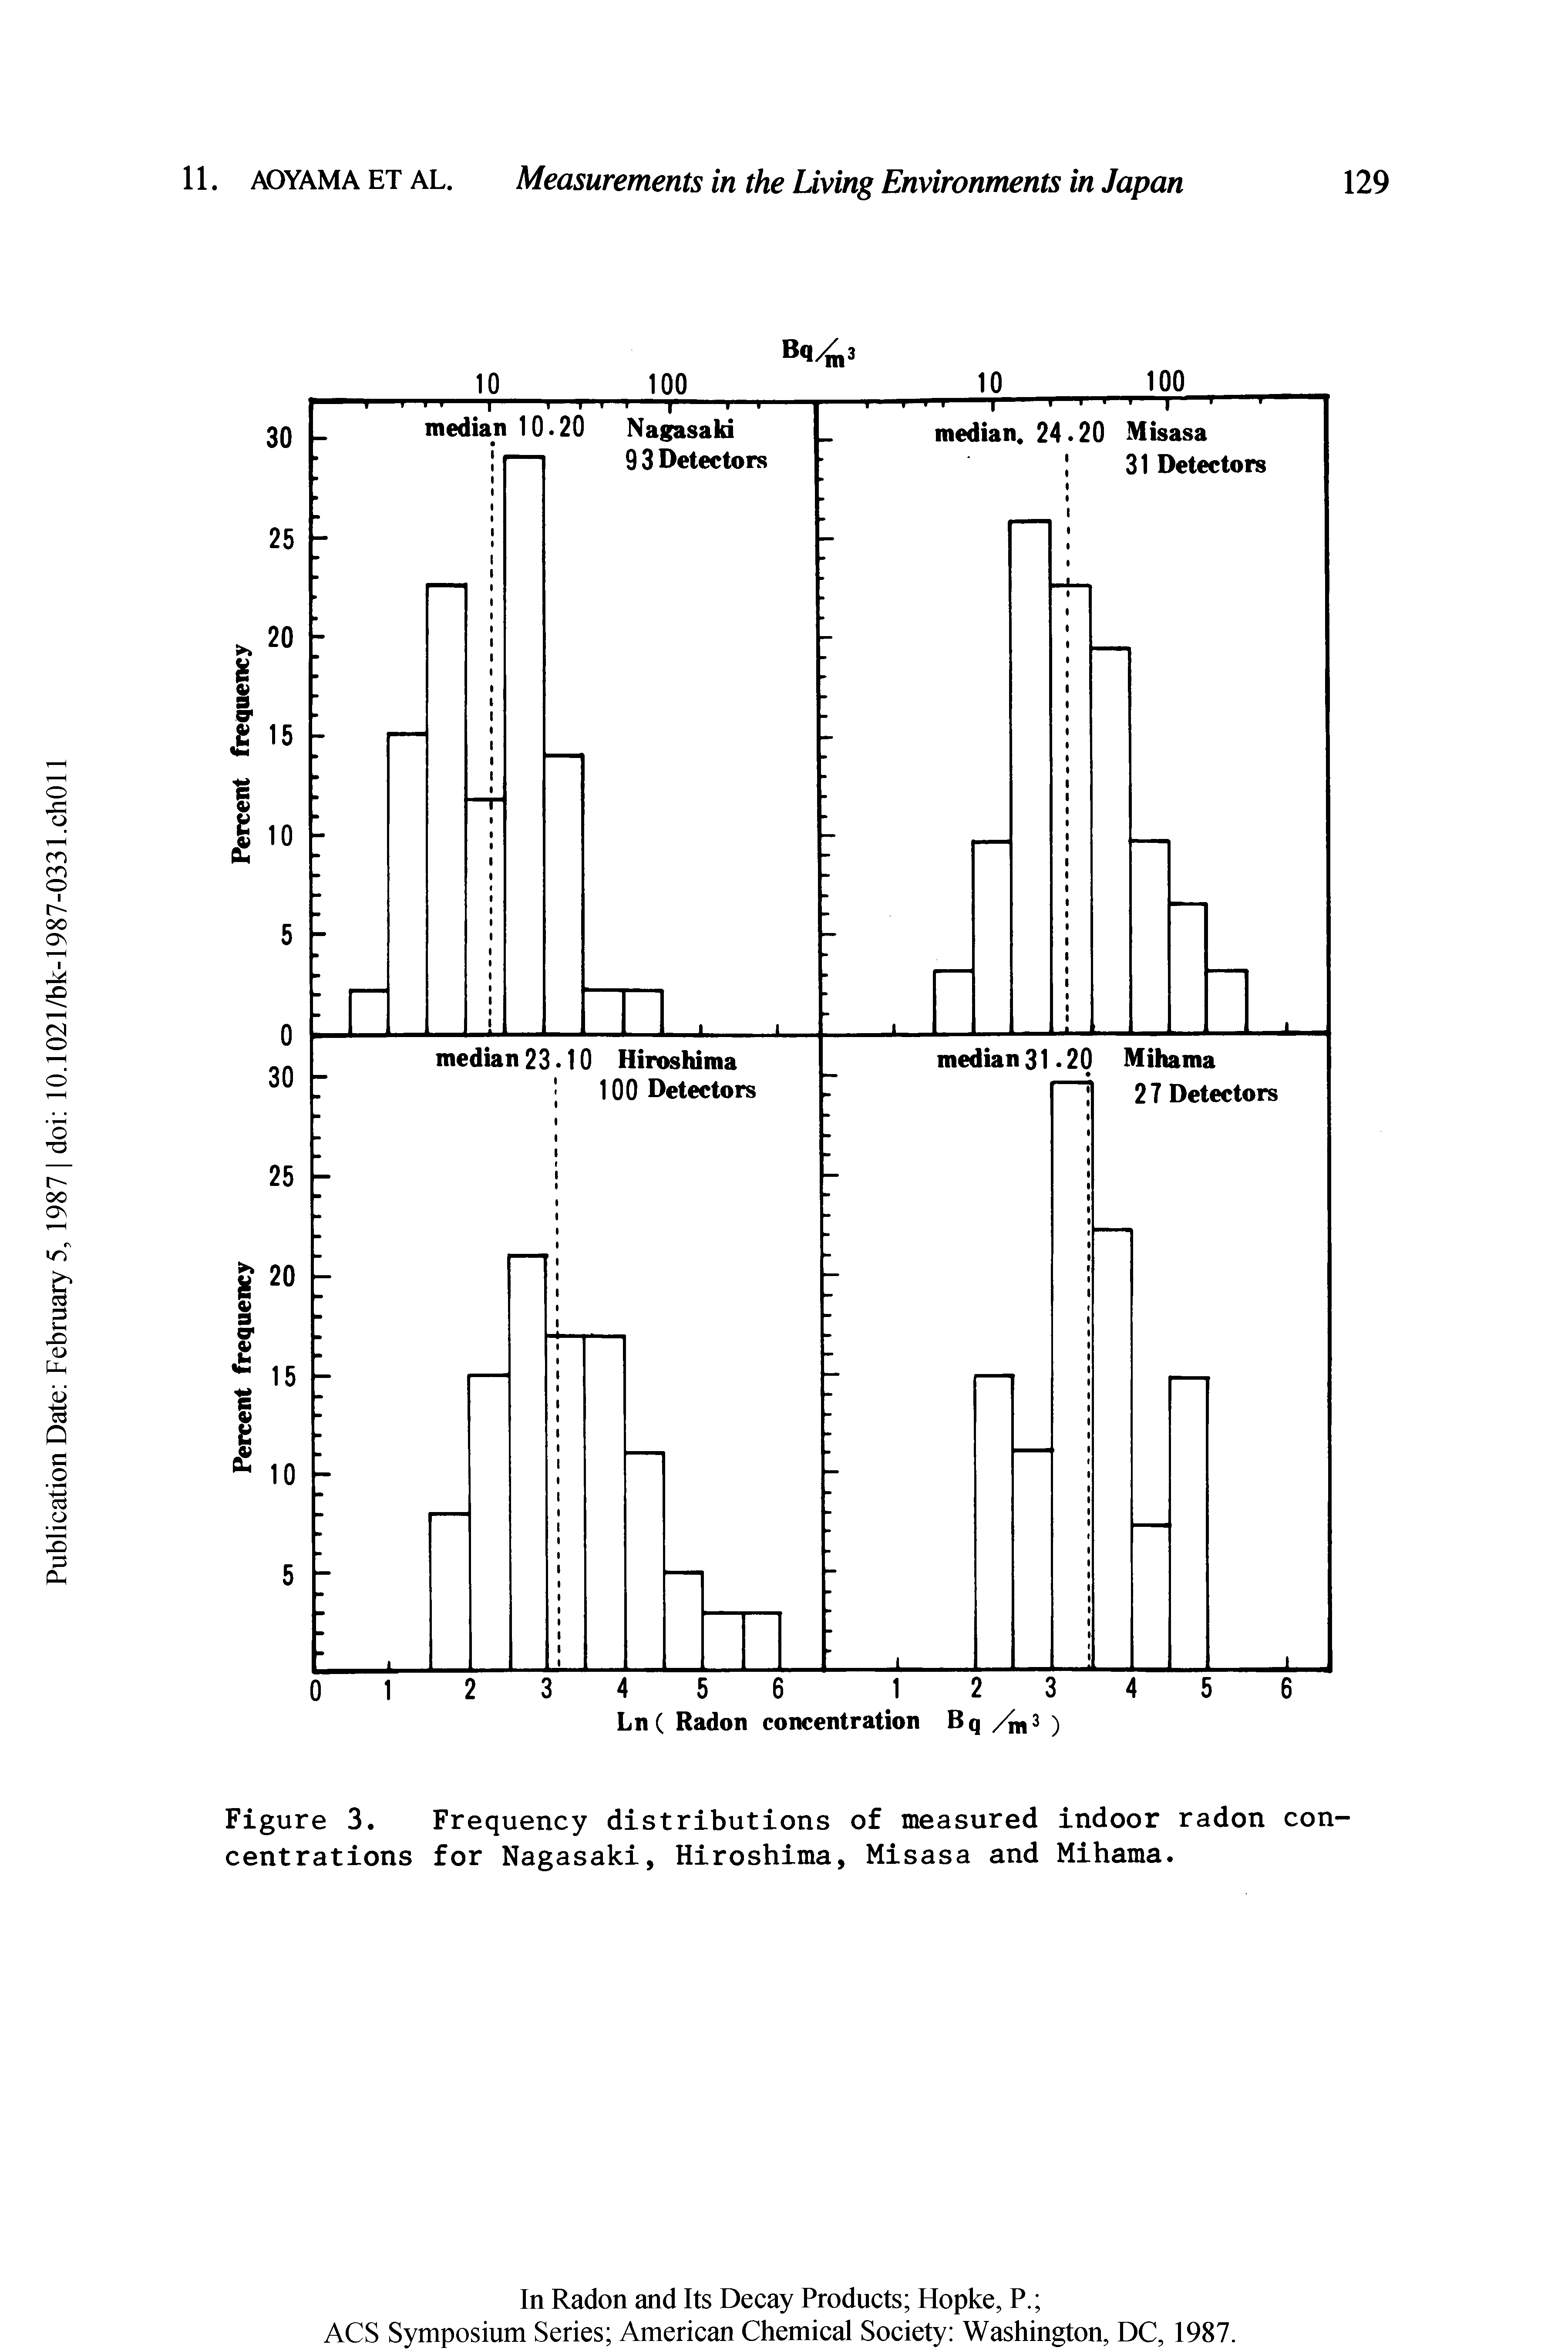 Figure 3. Frequency distributions of measured indoor radon concentrations for Nagasaki, Hiroshima, Misasa and Mihama.